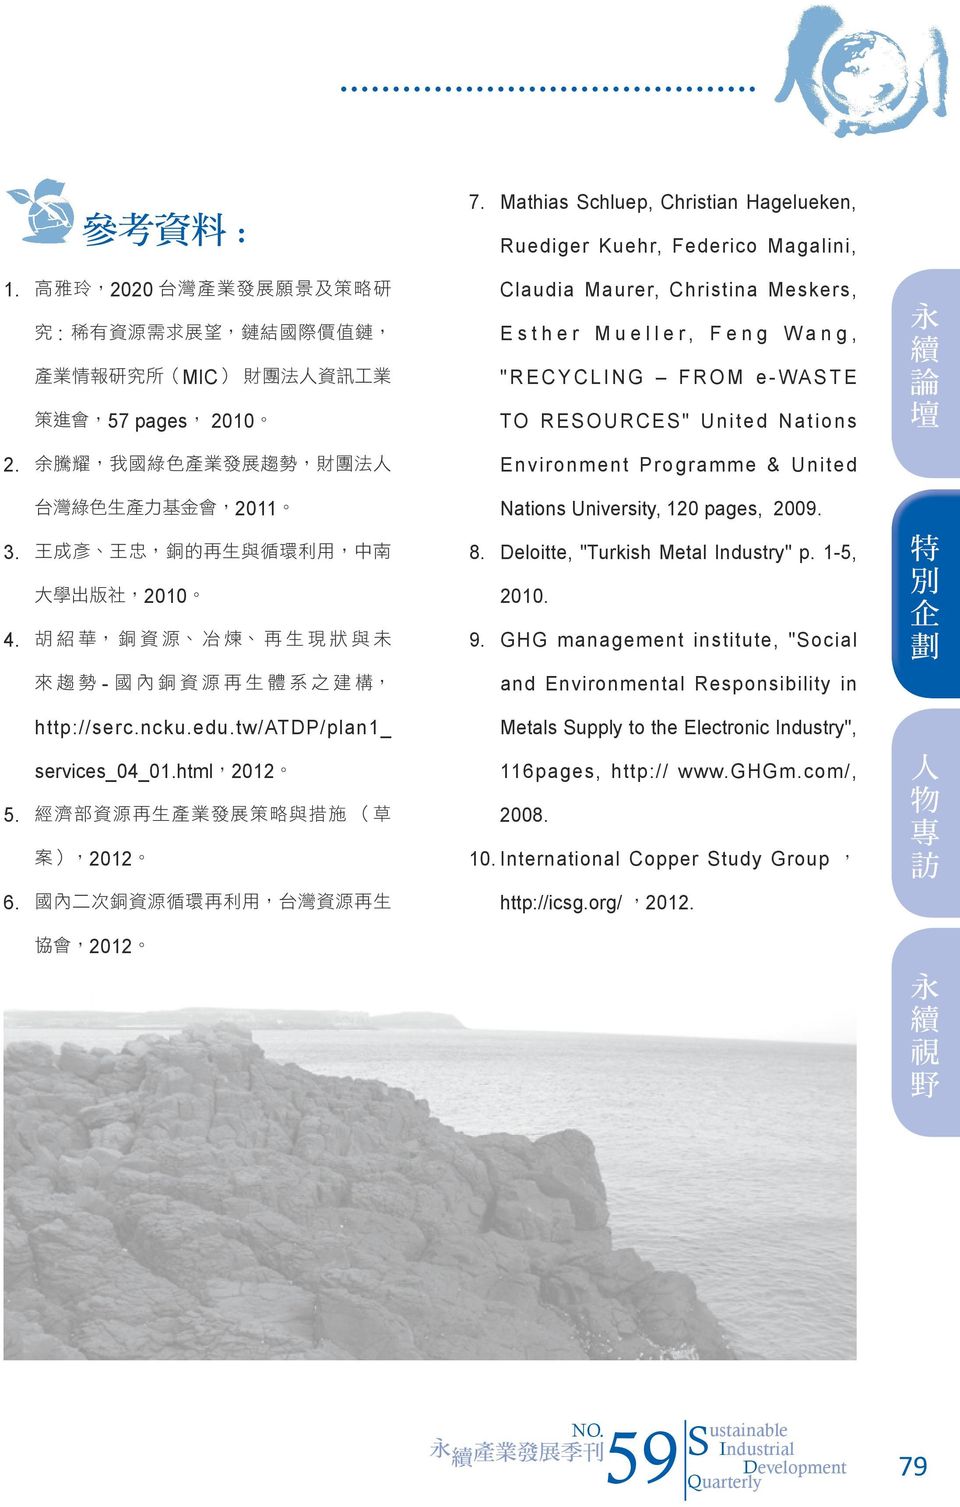 tw/atdp/plan1_ services_04_01.html,2012 5. 經 濟 部 資 源 再 生 產 業 發 展 策 略 與 措 施 ( 草 案 ),2012 6. 國 內 二 次 銅 資 源 循 環 再 利 用, 台 灣 資 源 再 生 協 會,2012 7.